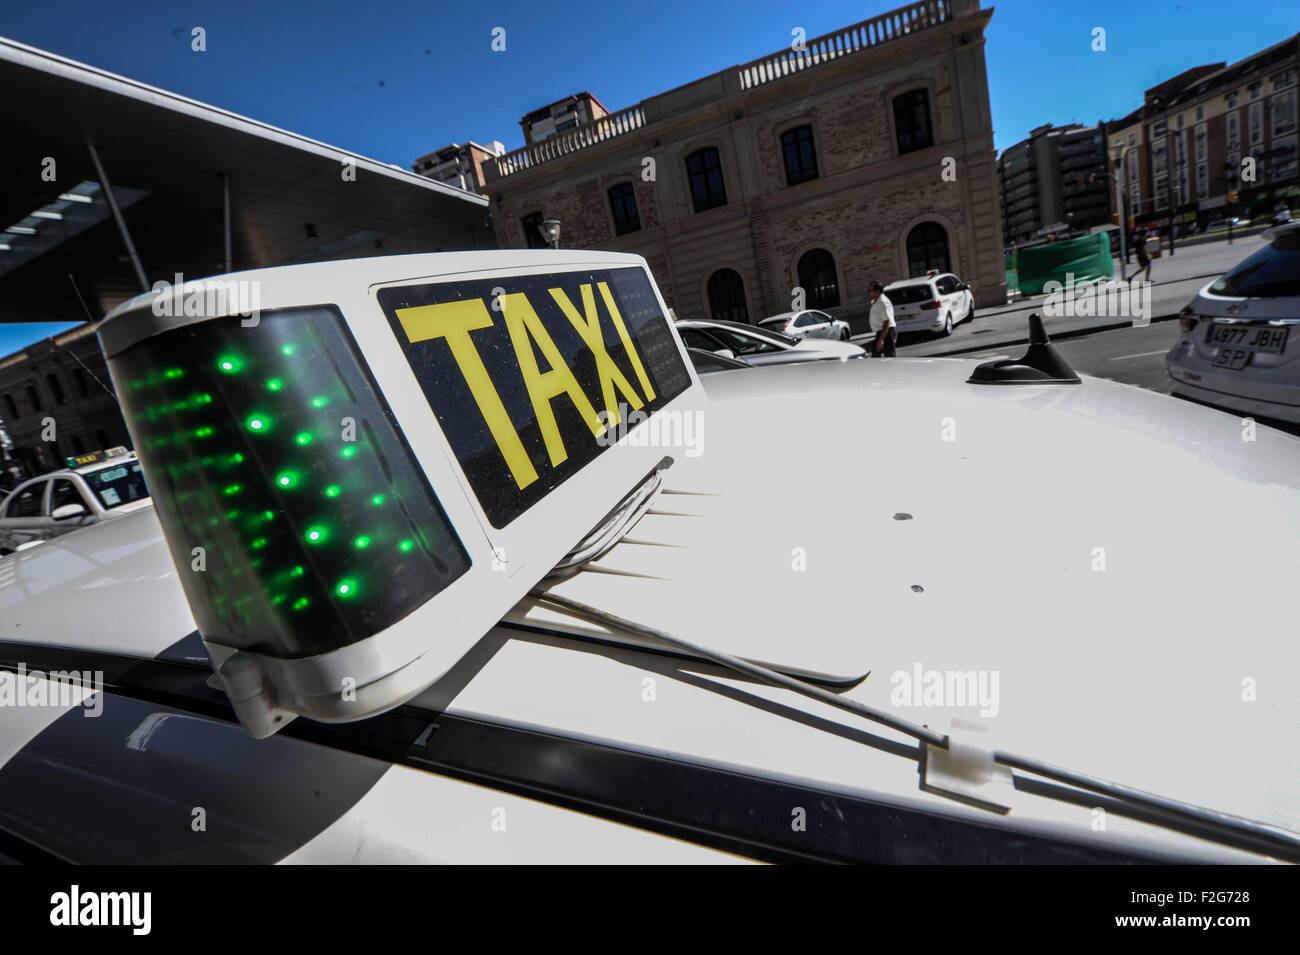 Taxi for hire sign at María Zambrano train station,Malaga,Spain Stock Photo